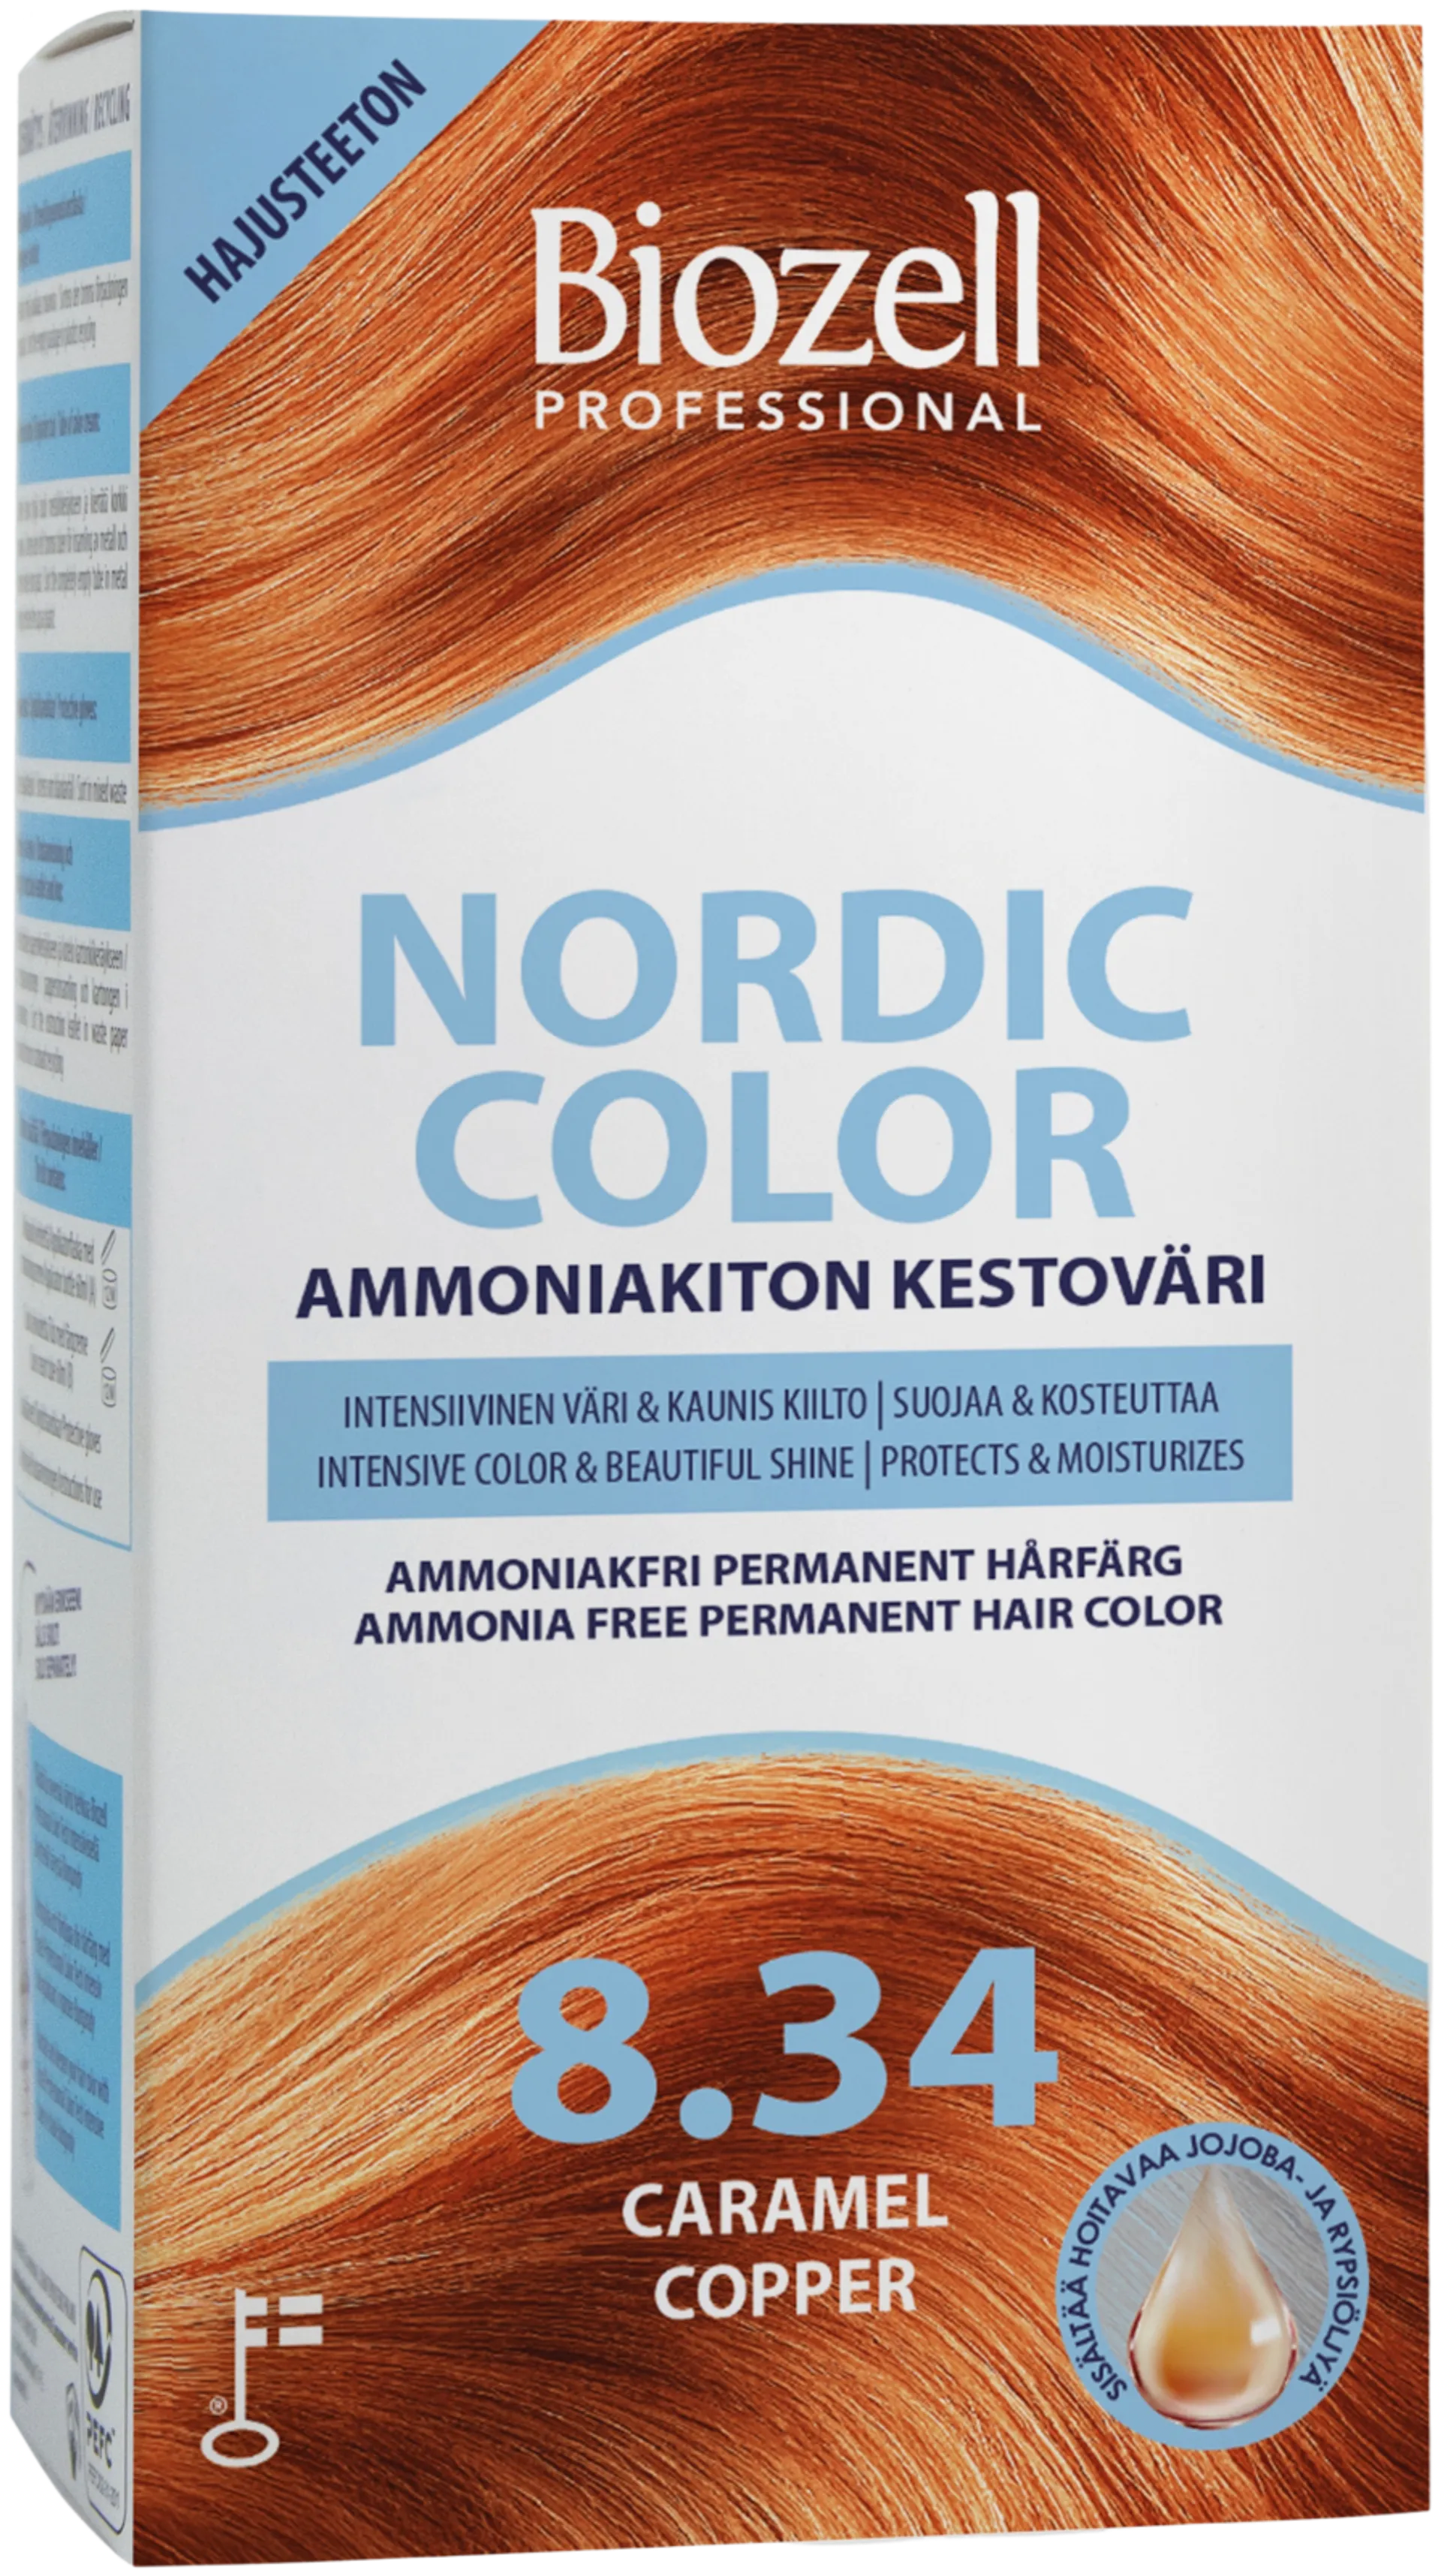 Biozell Professional Nordic Color ammoniakiton kestoväri Caramel Copper 8.34 2x60ml